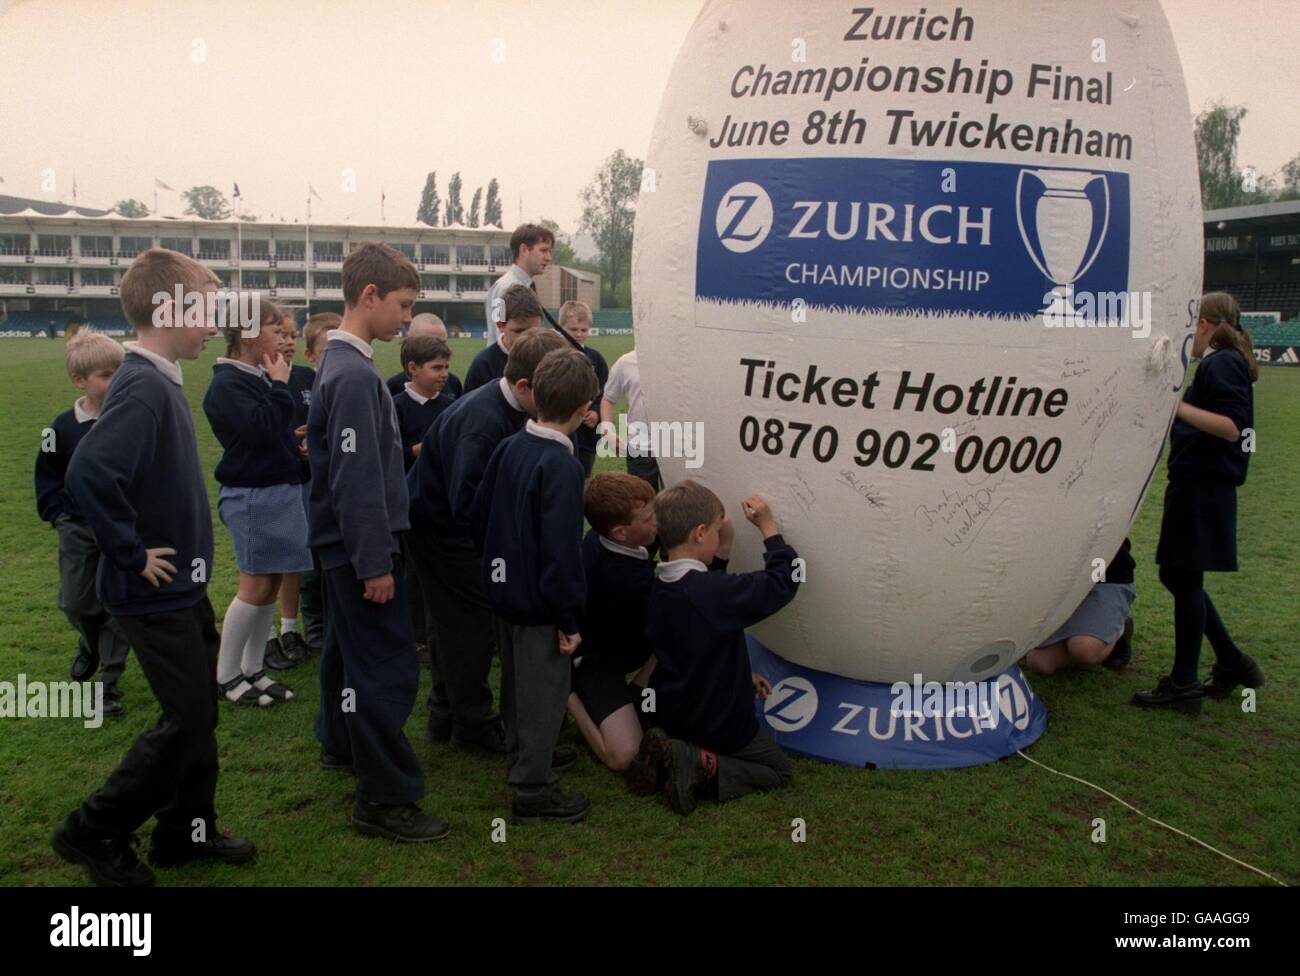 Rugby - Zurich Championship Tour Foto de stock